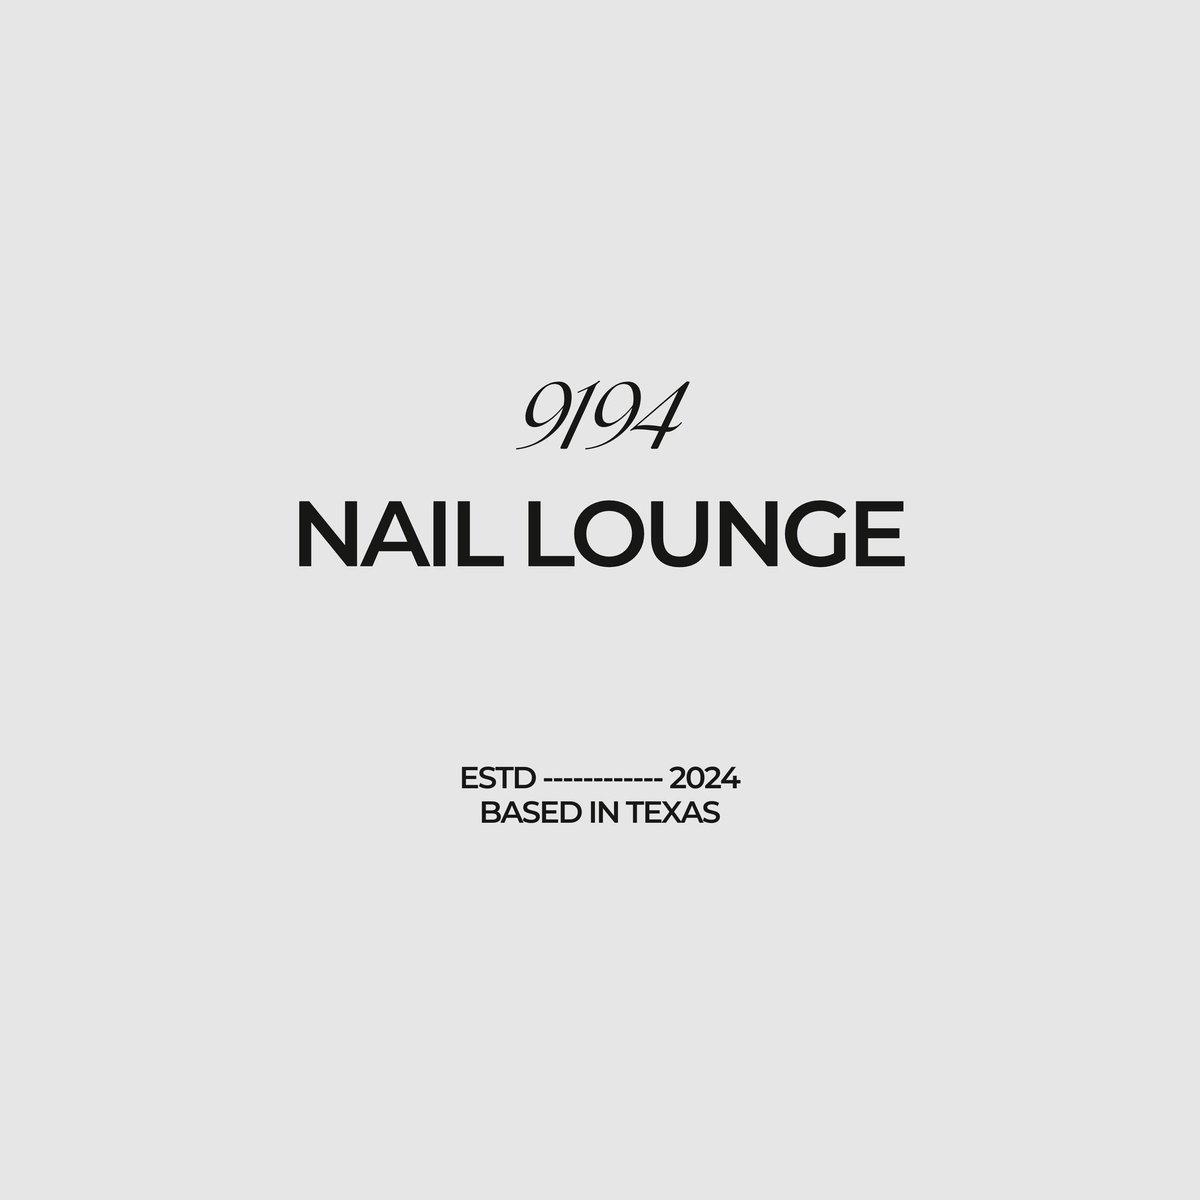 👉𝐶𝑂𝑀𝐼𝑁𝐺 𝑆𝑂𝑂𝑁 #nailsSanAntonio #9194naillounge #nailsdesign #longnails #dipping #acrylic #gelnails #fullset #nailsalonSanAntonio #nailstrendy #shortnails #nailinSanAntonio #9194nailloungeSanAntonio